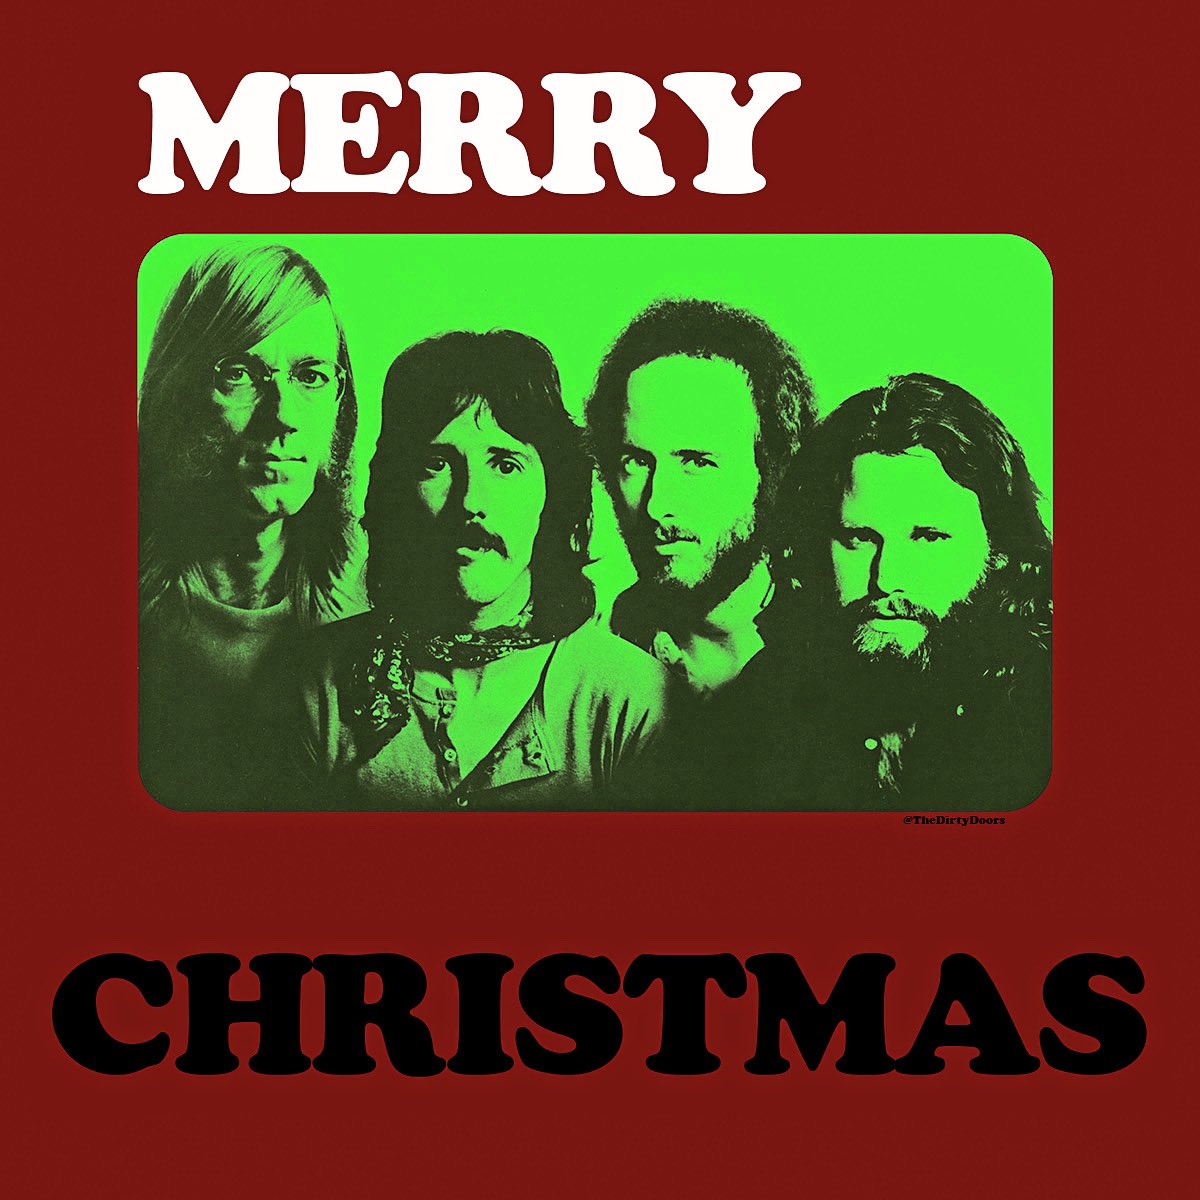 Merry Christmas! #thedoors  #thedirtydoors #lawoman #christmas #xmas #merrychristmas